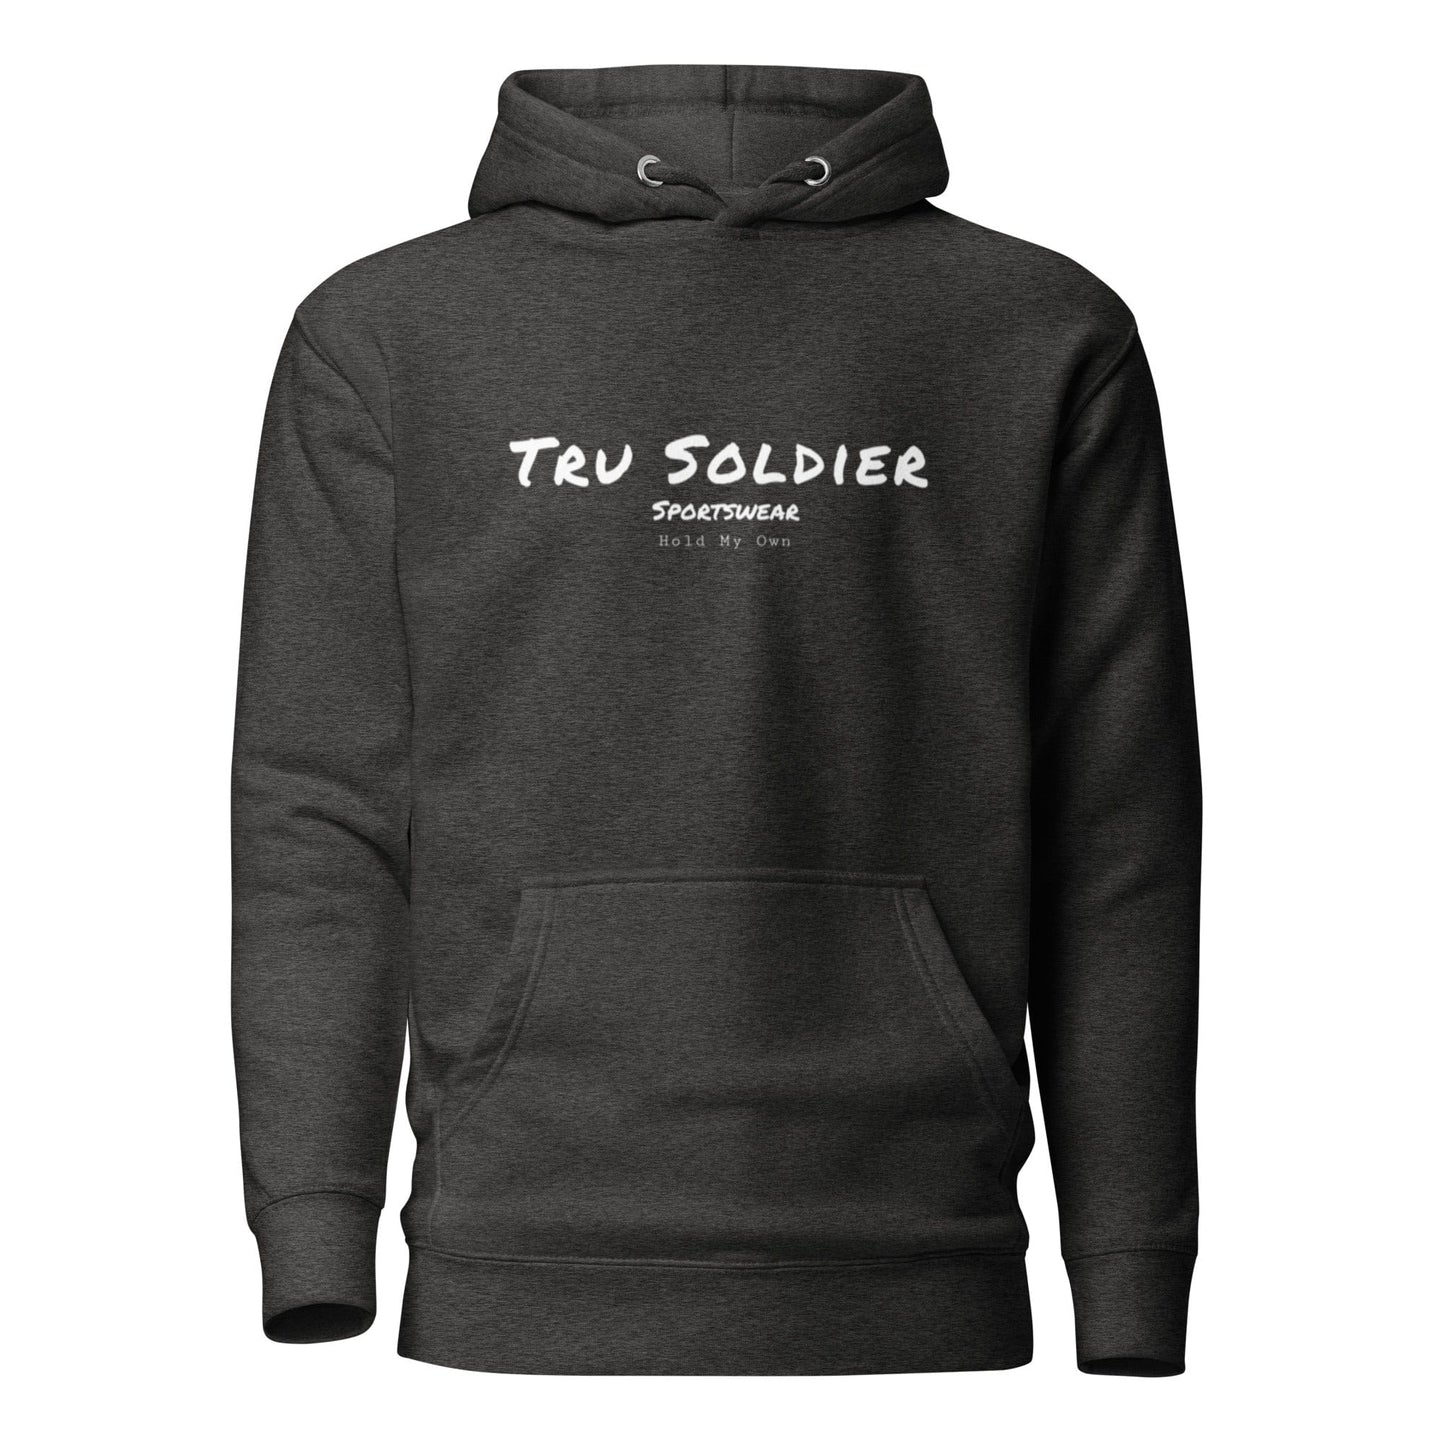 Tru Soldier Sportswear  Charcoal Heather / S Signature Hoodie